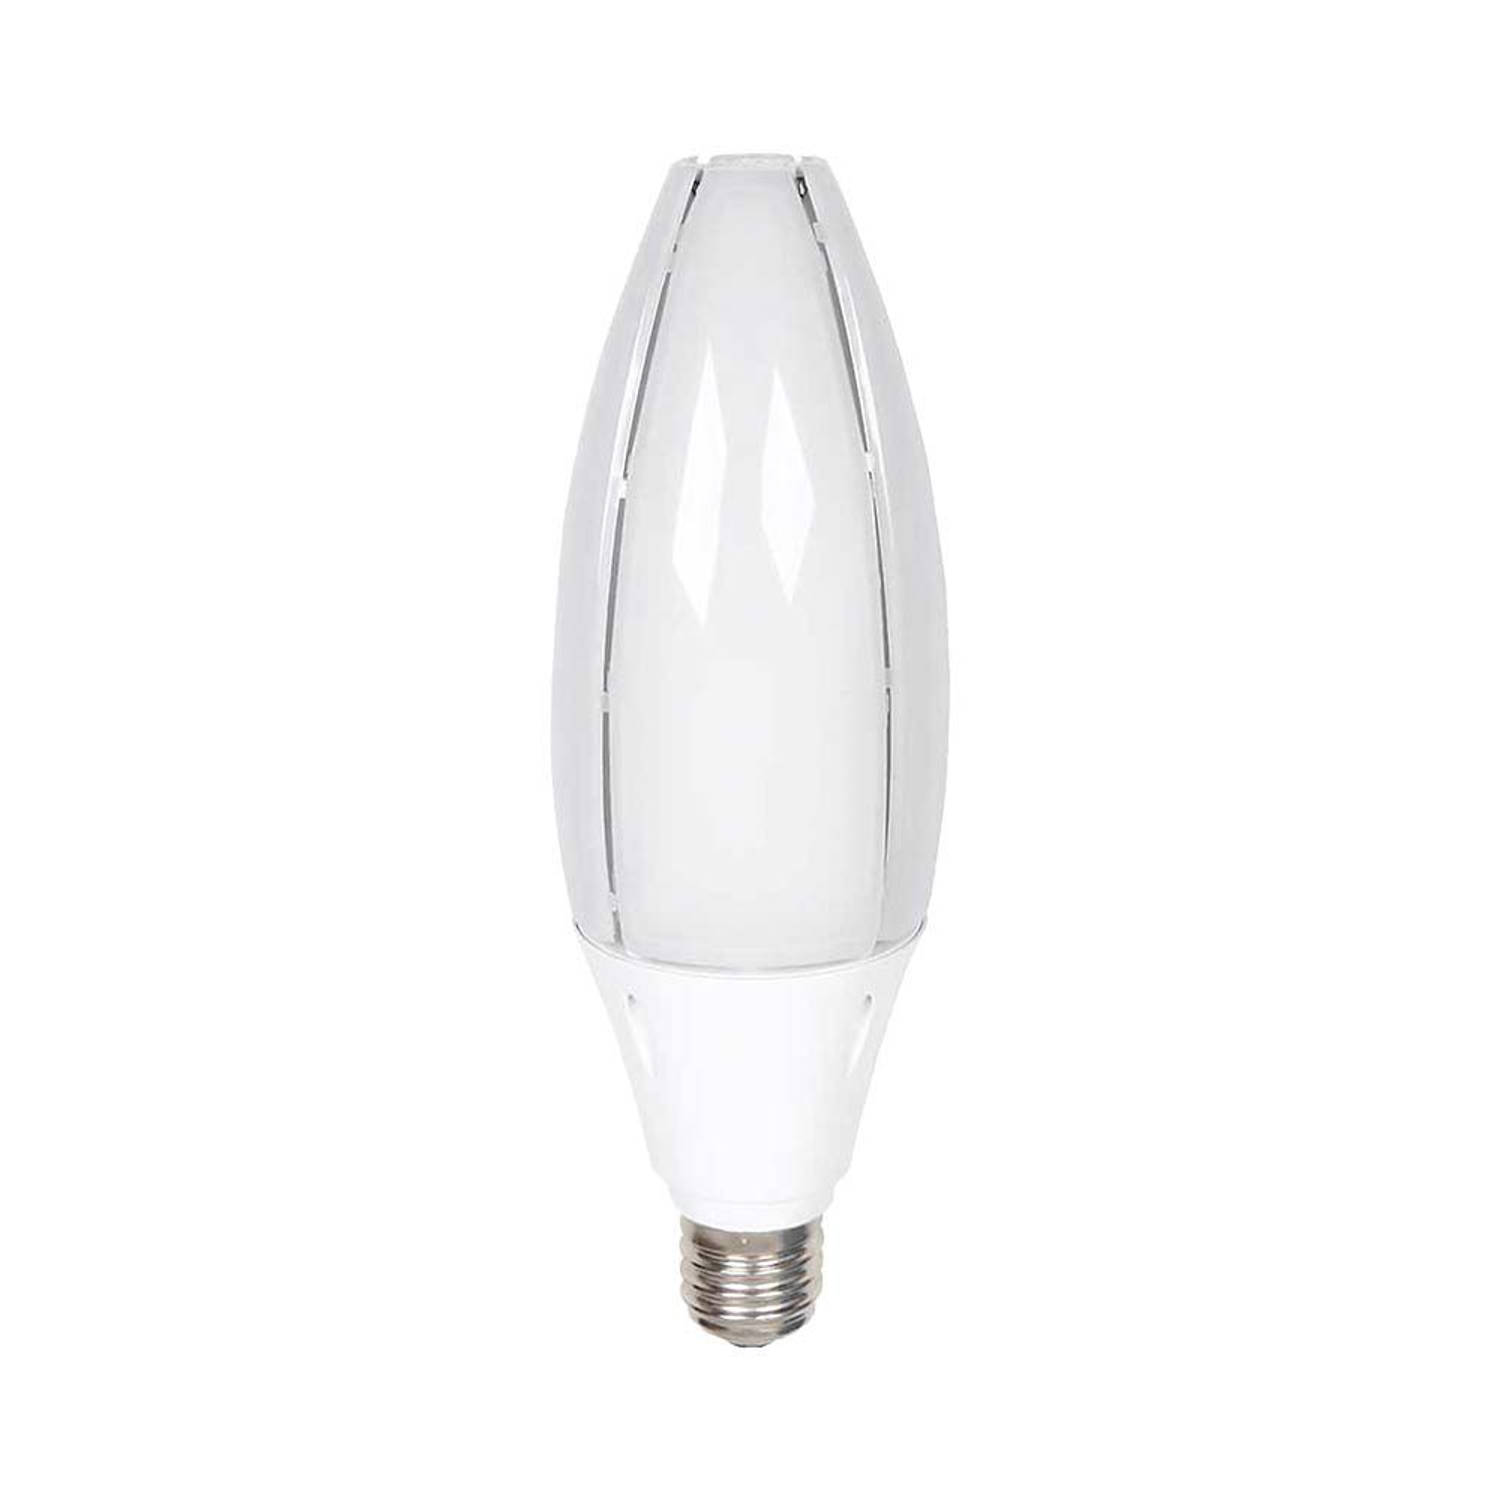 V-TAC E40 LED Lamp - Olijf - Samsung - IP20 - Wit - 60W - 6500 Lumen - 4000K - 5 Jaar